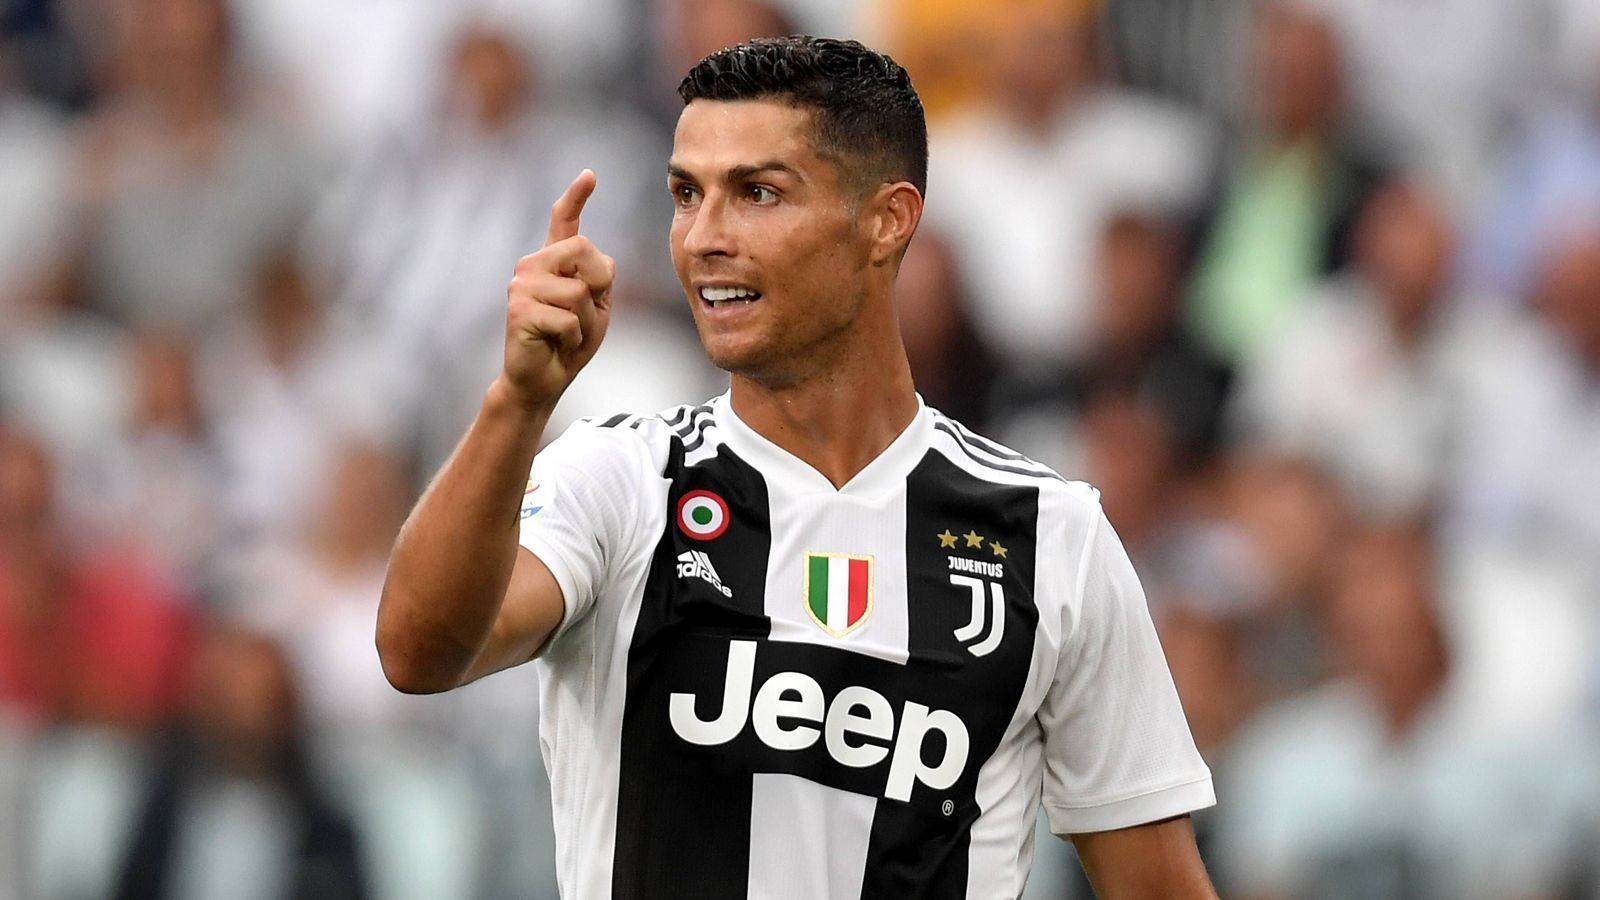 
                <strong>Topf 1: Juventus Turin (Meister in Italien)</strong><br>
                Größter CL-Erfolg: Sieger 1985, 1996Trainer: Massimiliano AllegriTopstar: Cristiano Ronaldo (Bild)
              